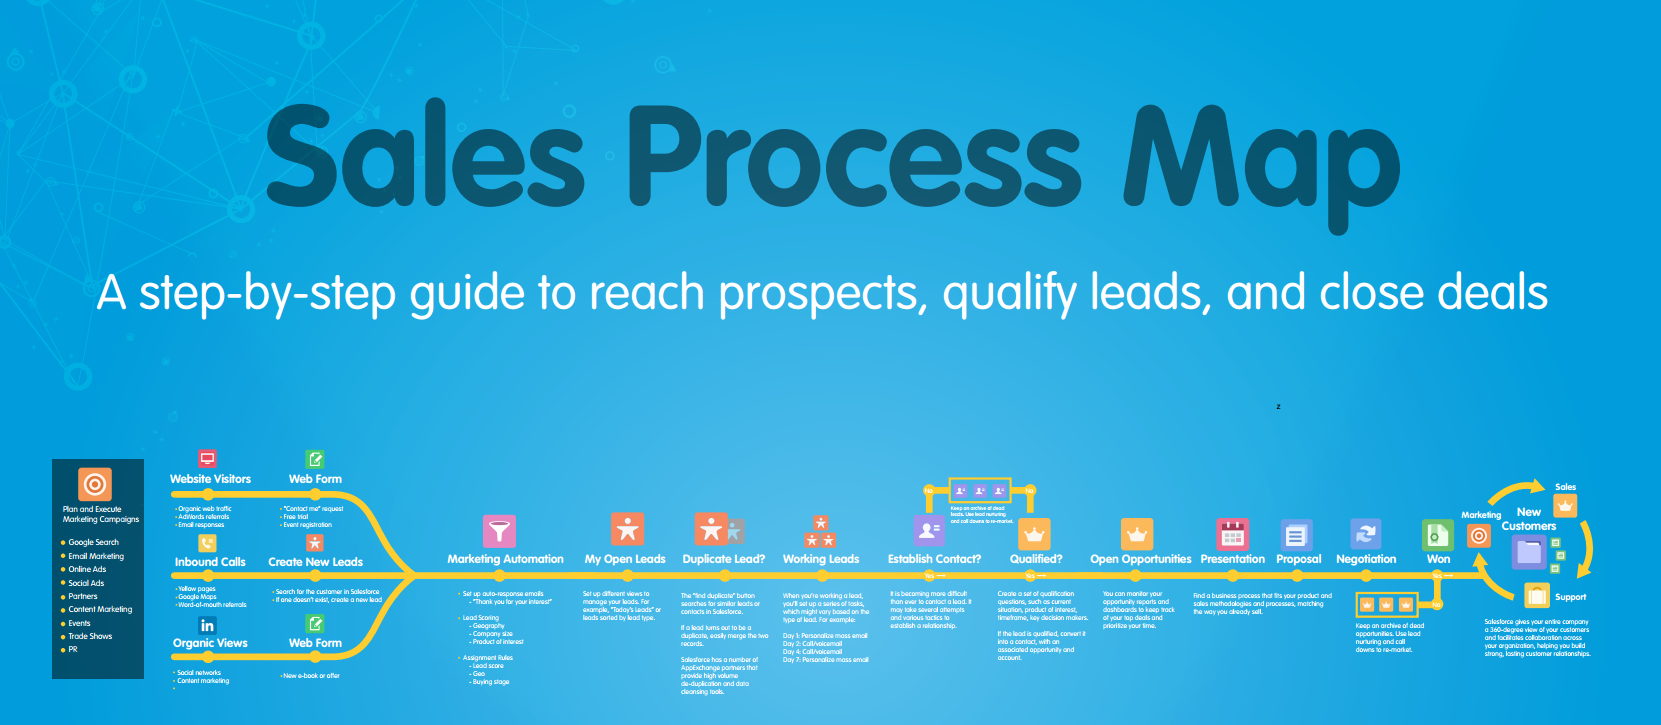 Sales Process Map